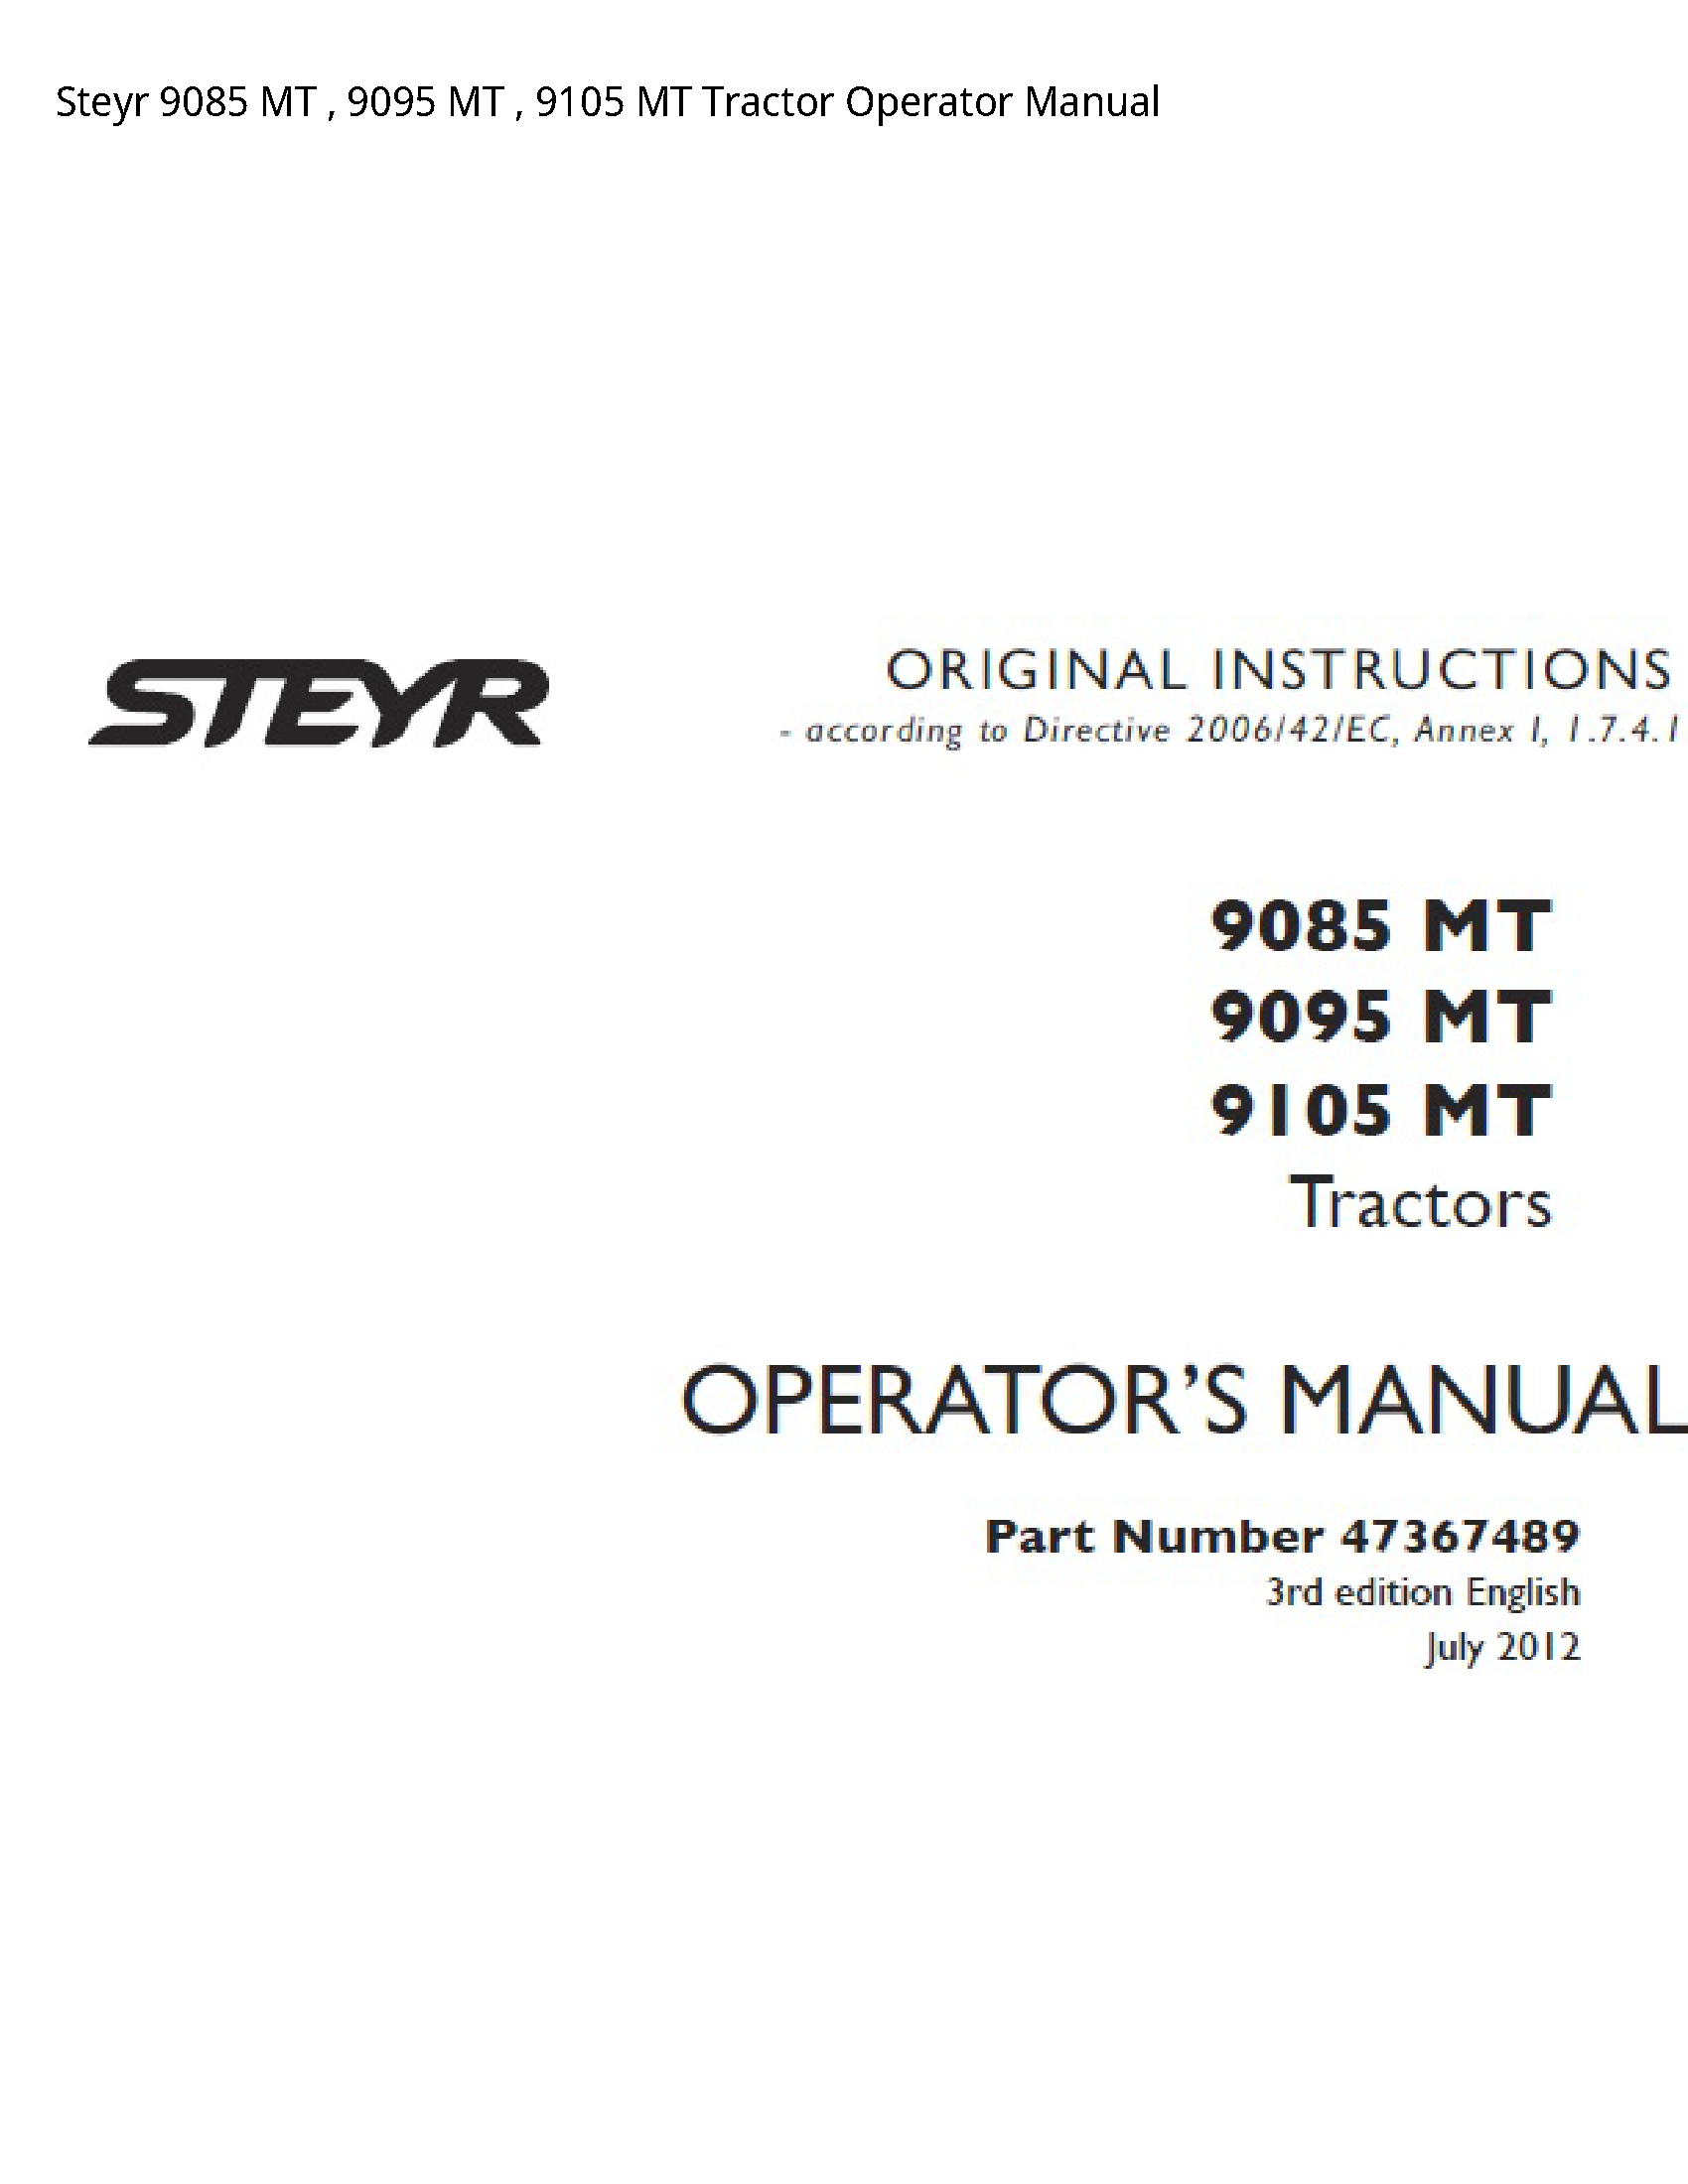 Steyr 9085 MT MT MT Tractor Operator manual